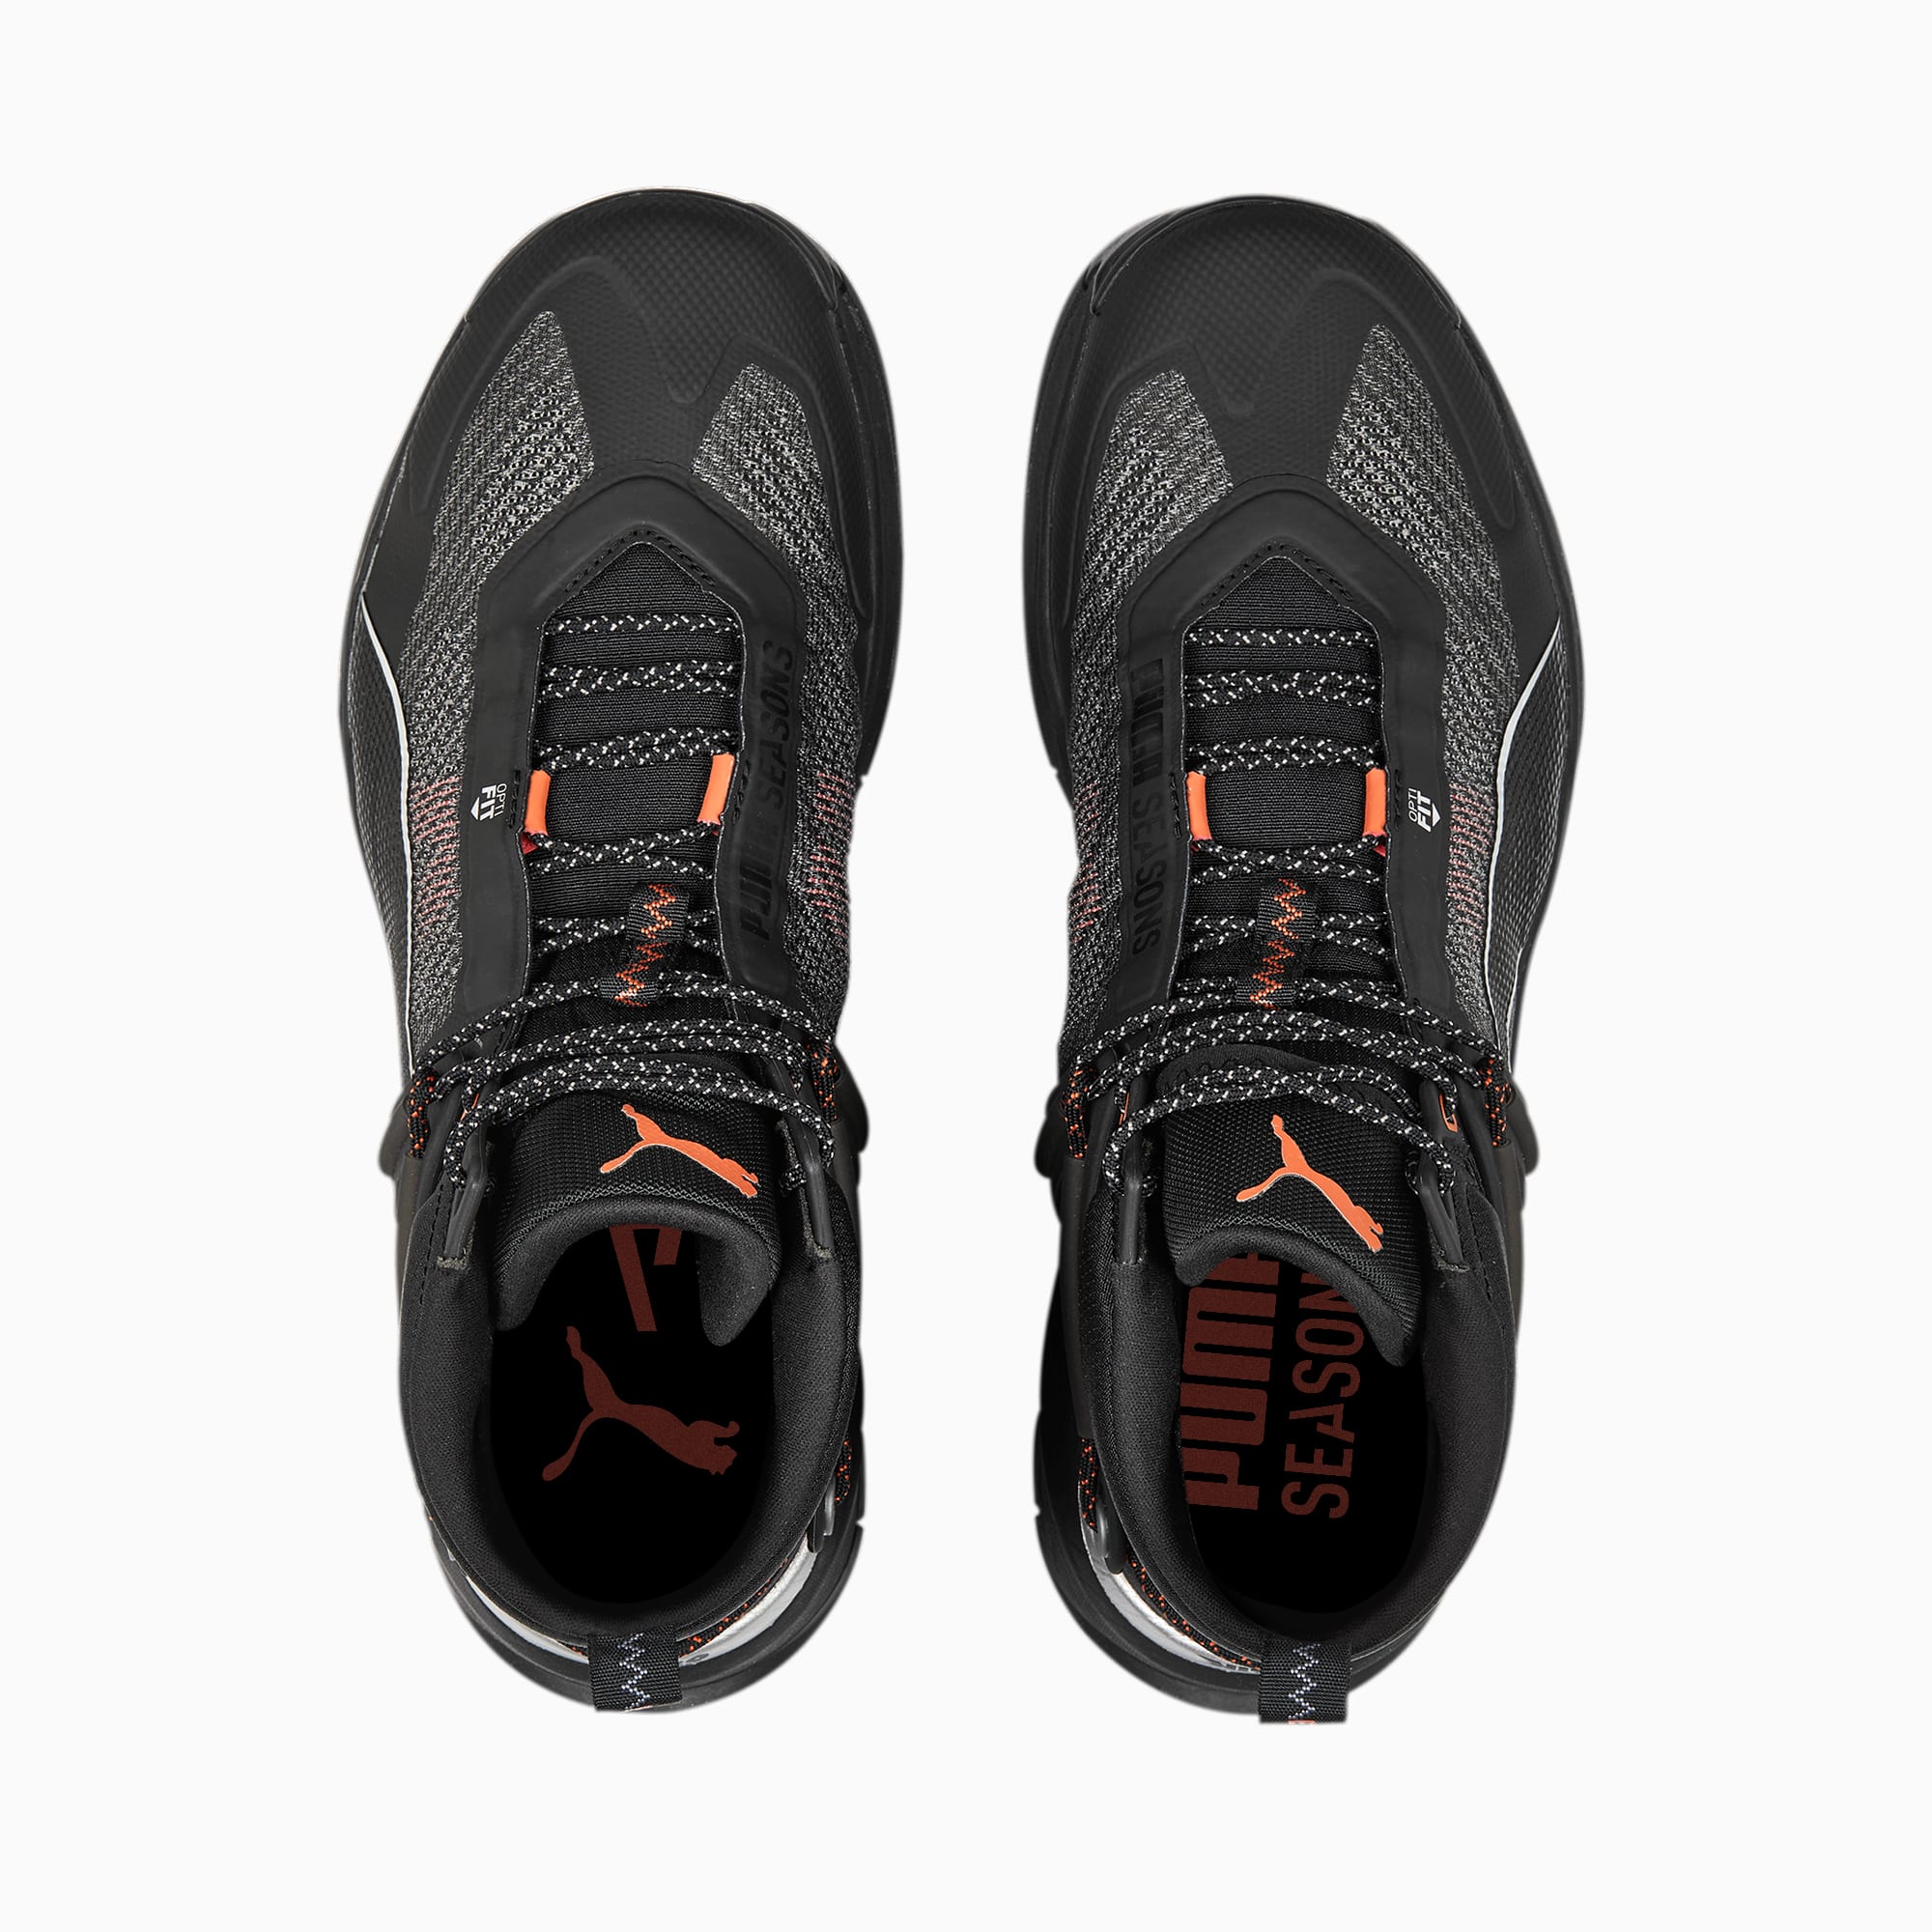 SEASONS Explore NITRO™ Mid Men's Hiking Shoes | PUMA